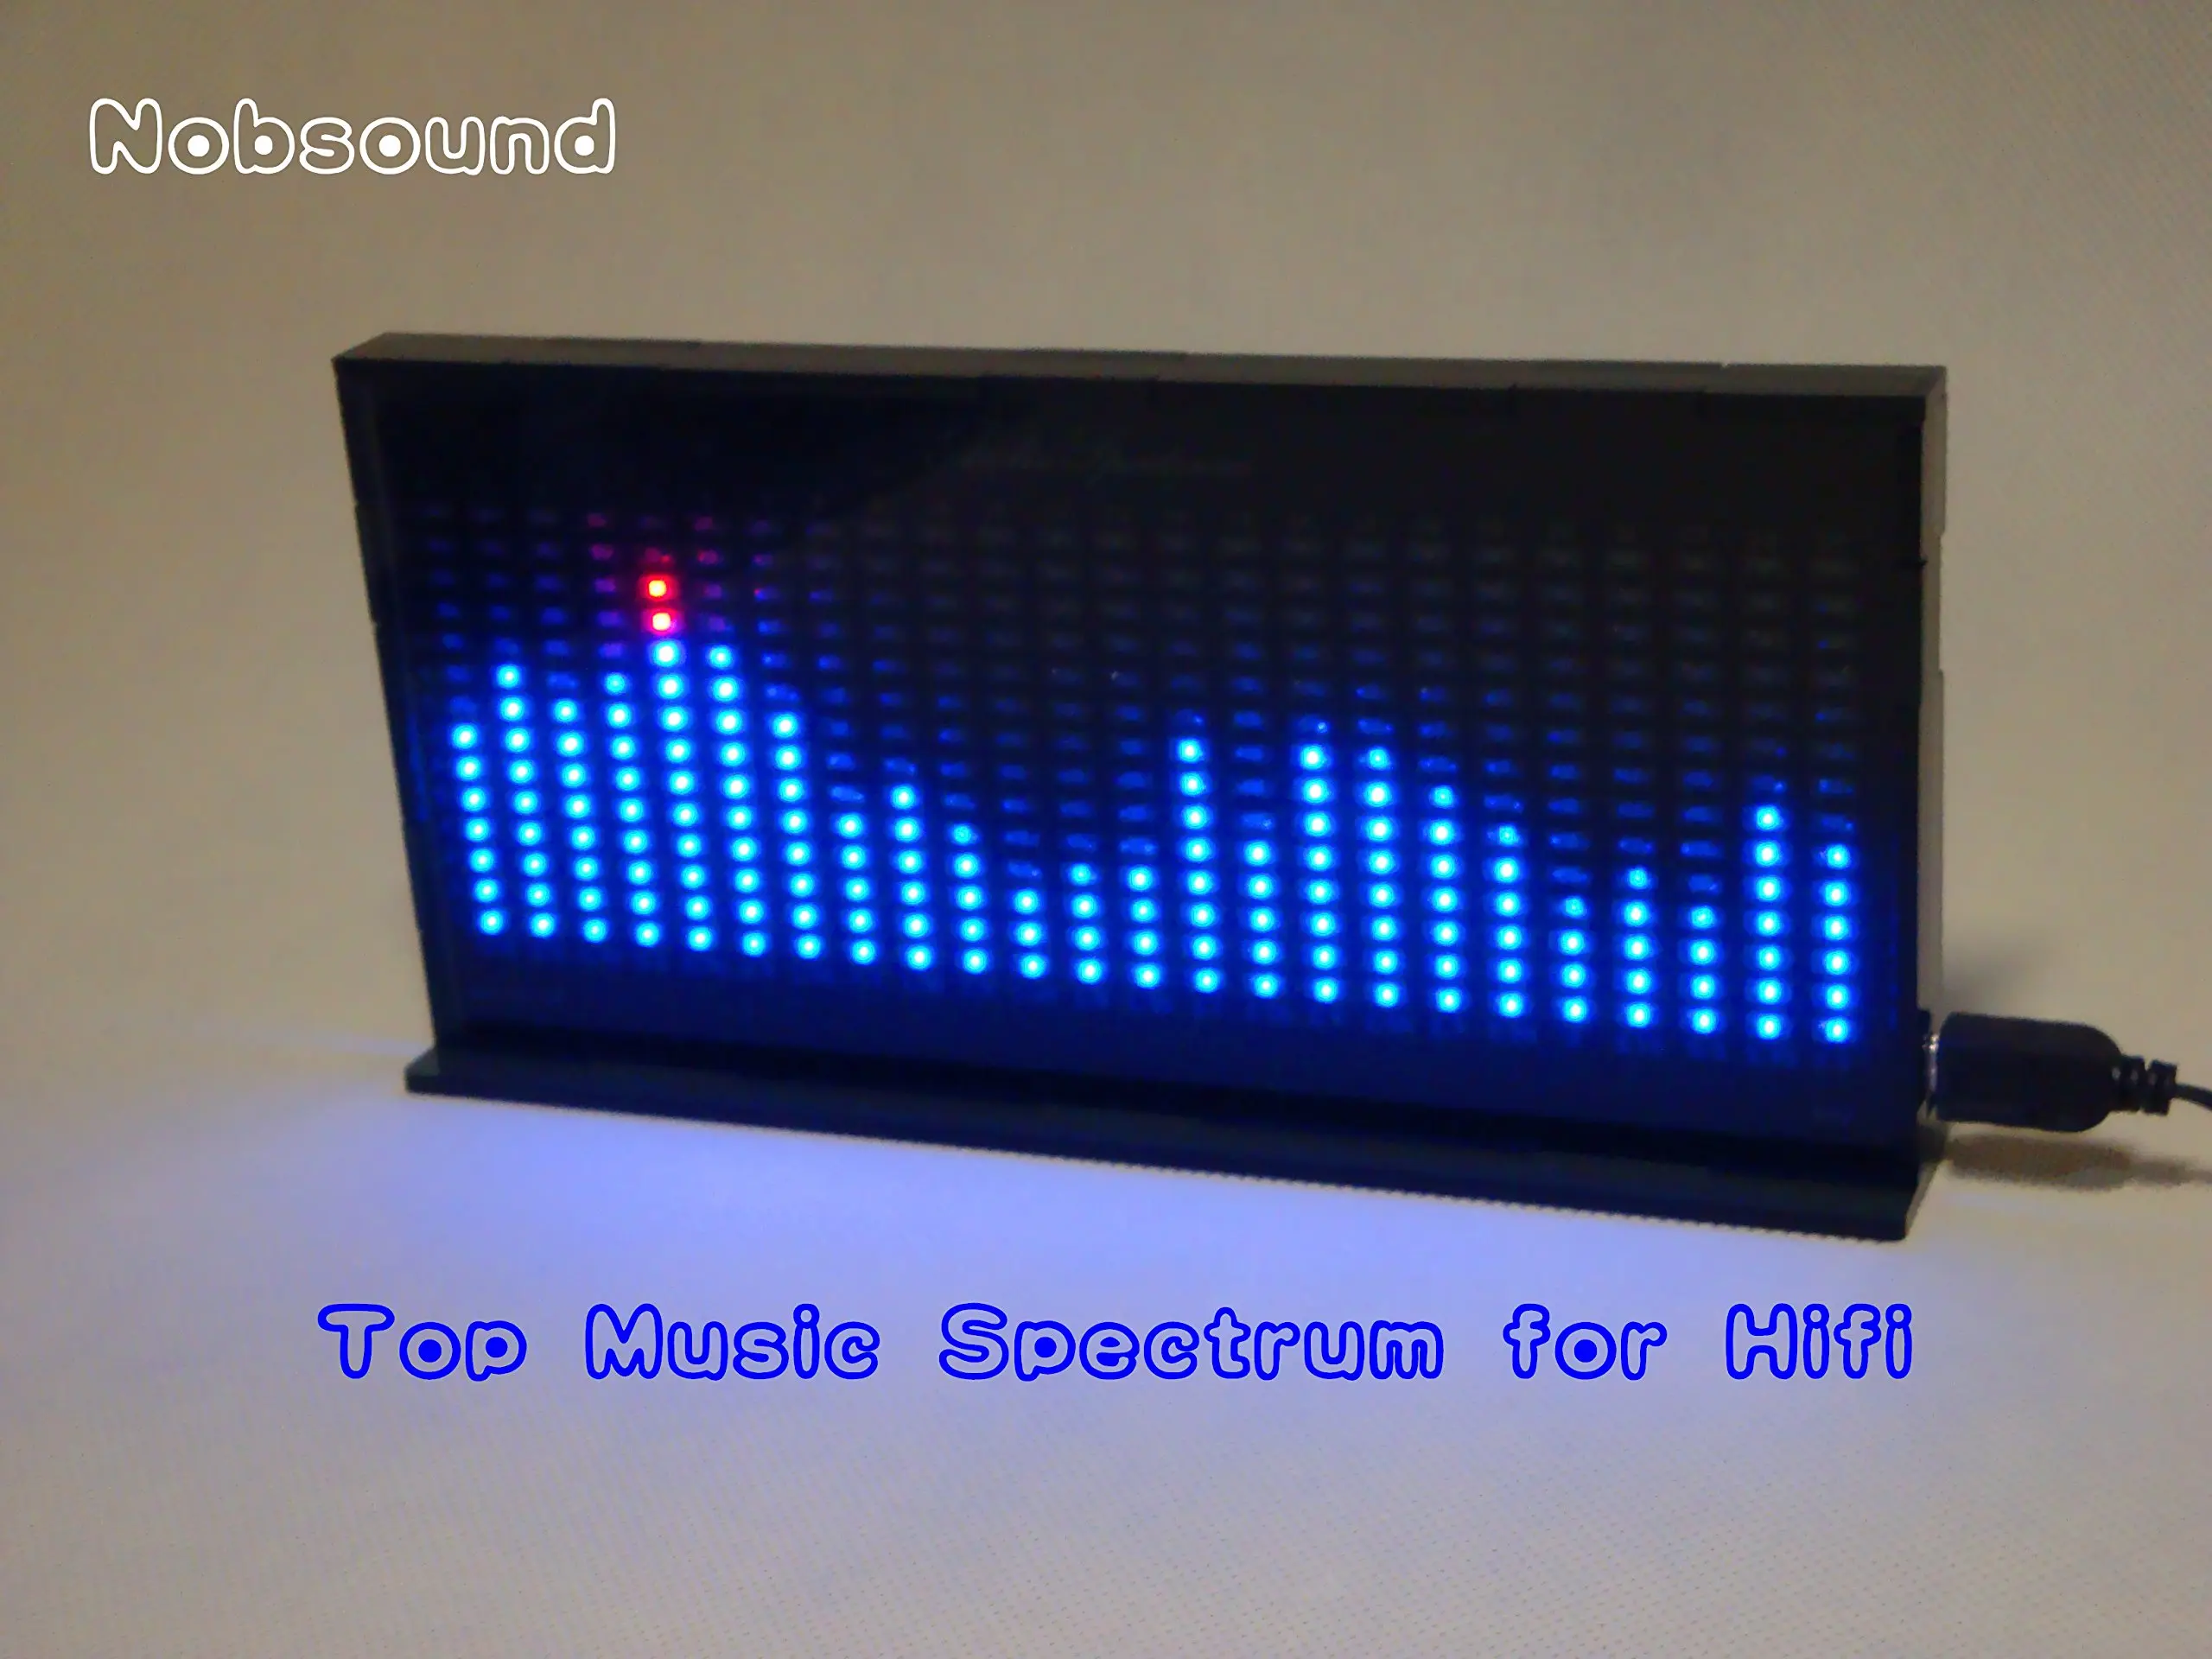 auto music spectrograph song program